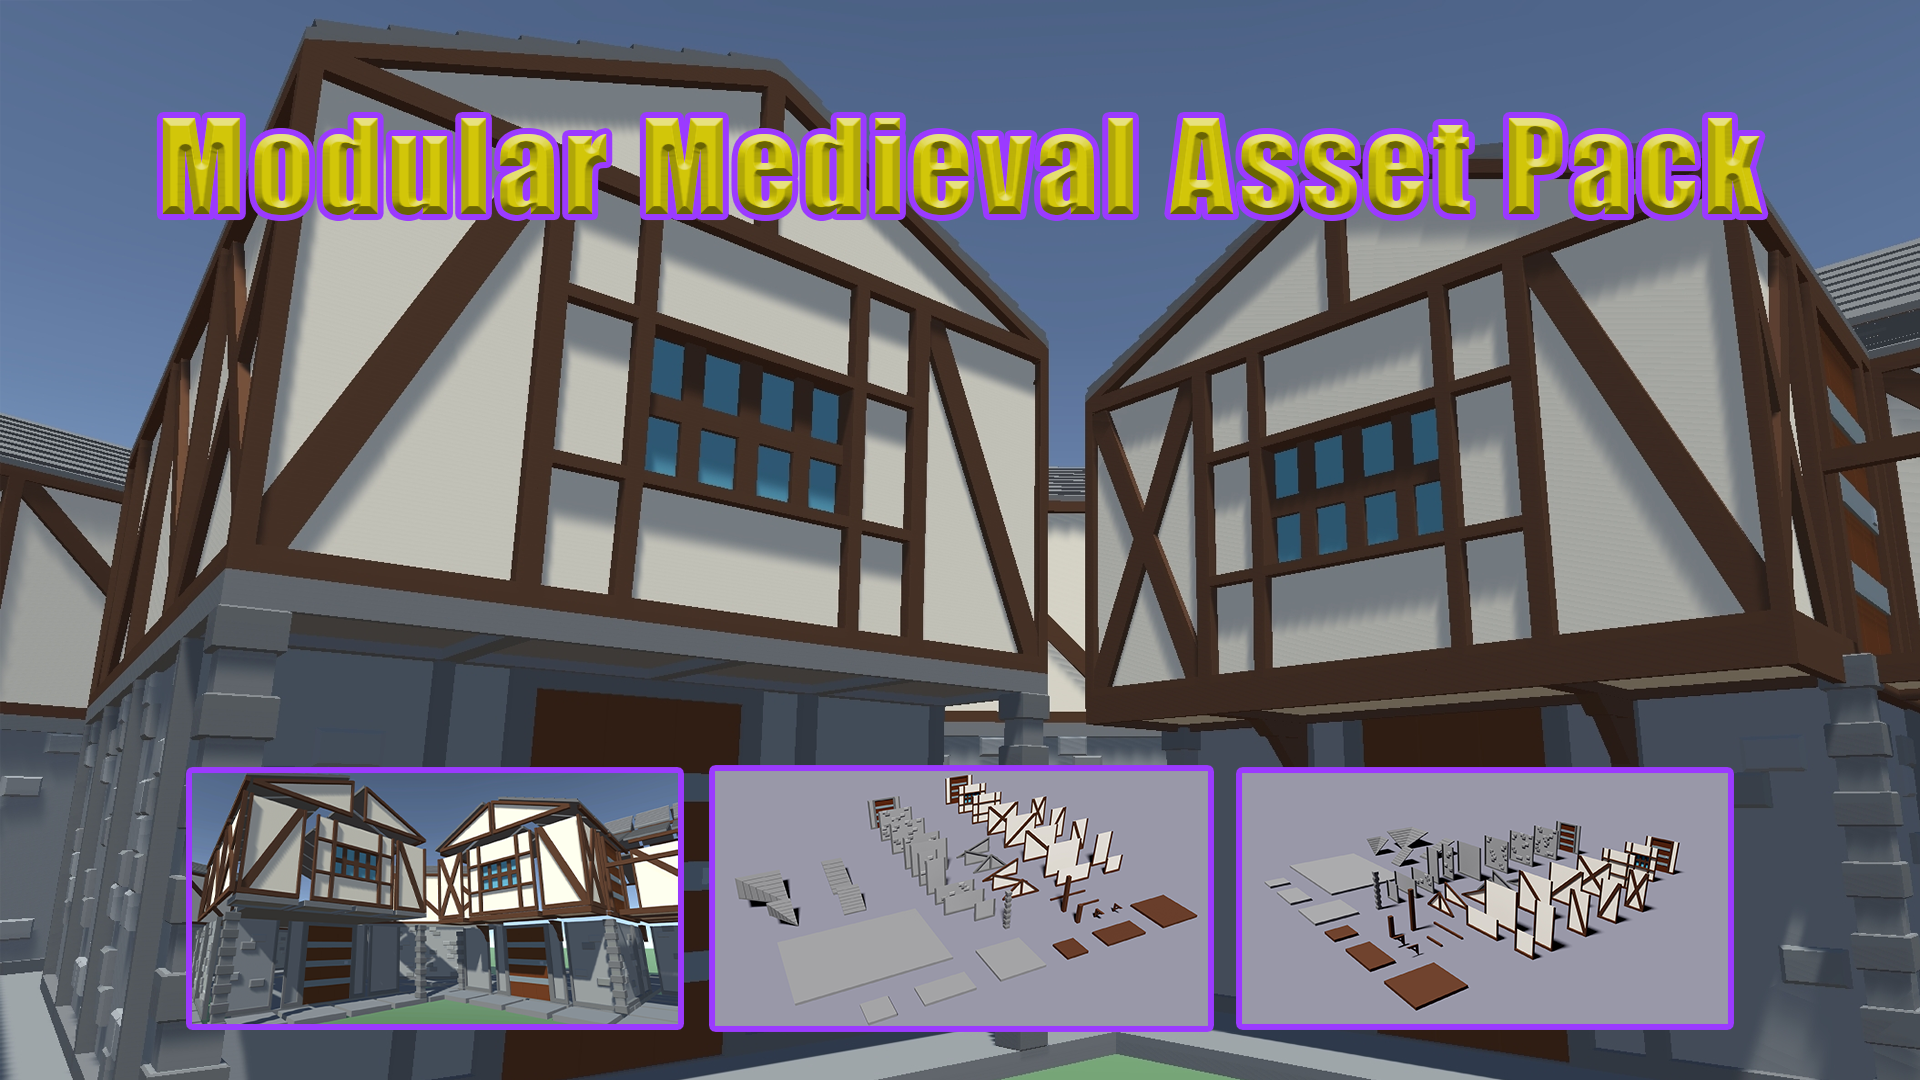 Modular Medieval Asset Pack